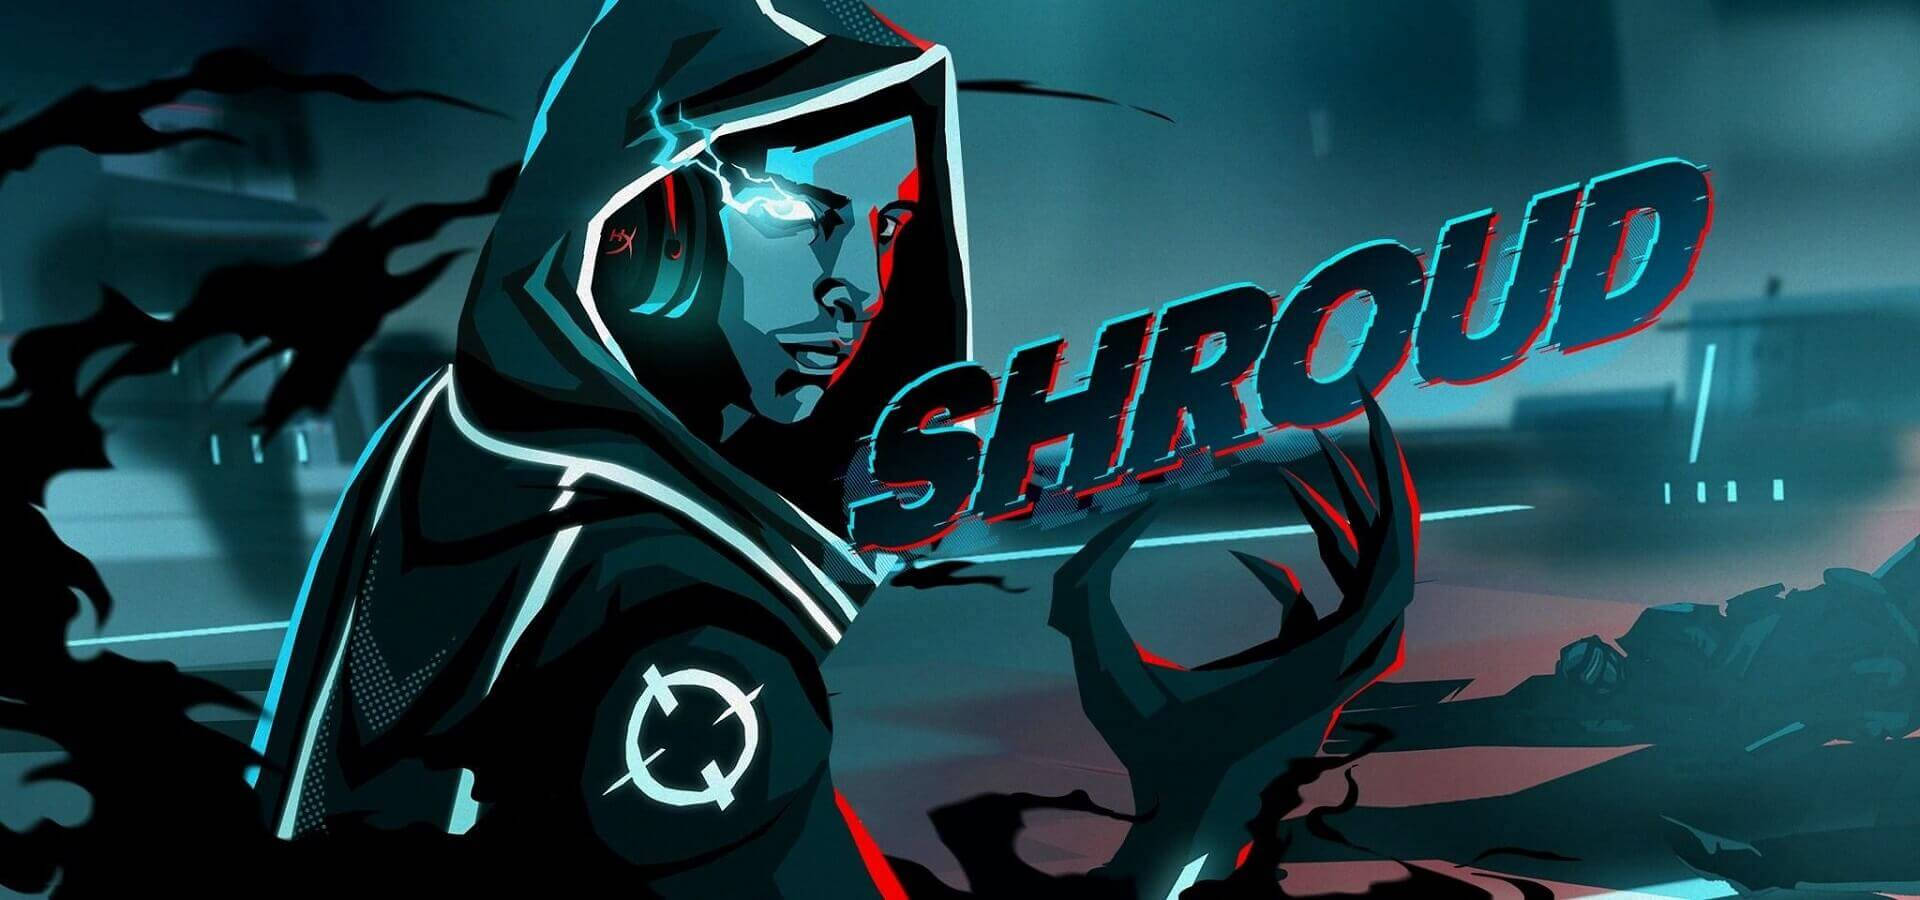 Animated Shroud Gamer Poster Background